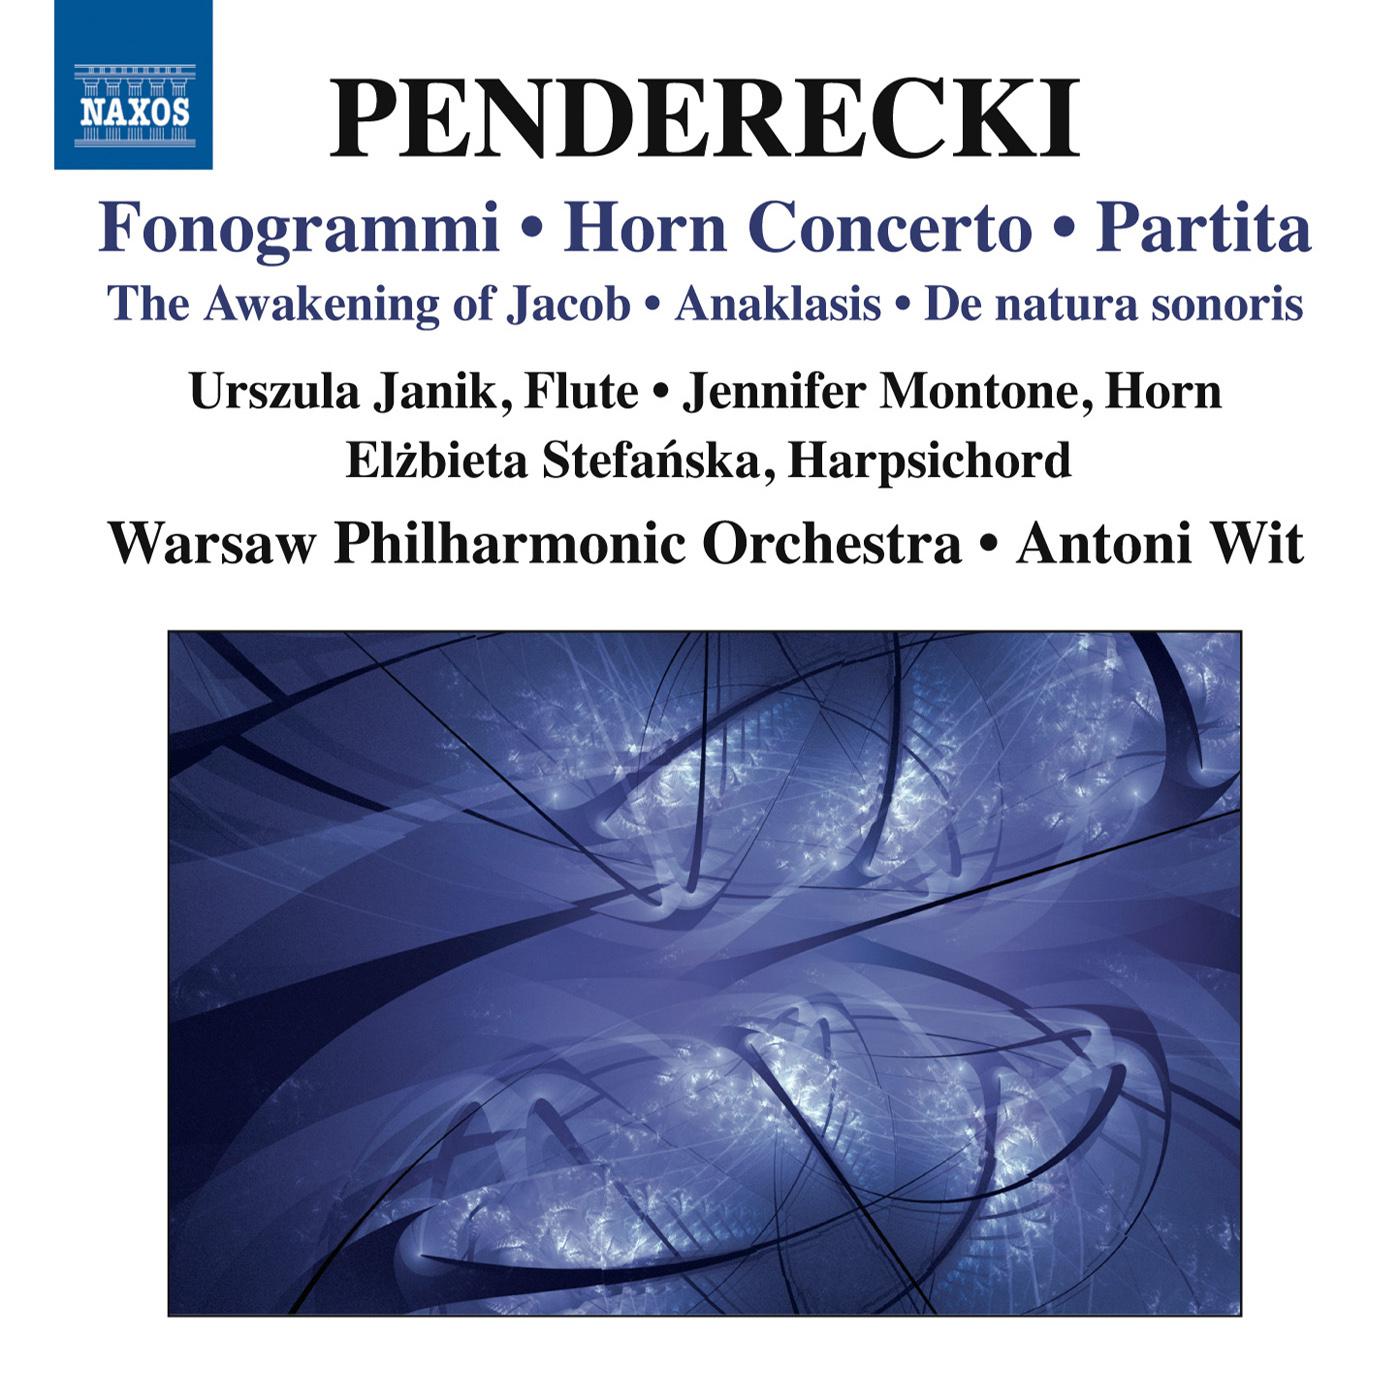 PENDERECKI, K.: Fonogrammi / Horn Concerto / Partita / The Awakening of Jacob / Anaklasis / De natura sonoris No. 1 (Warsaw Philharmonic, Wit)